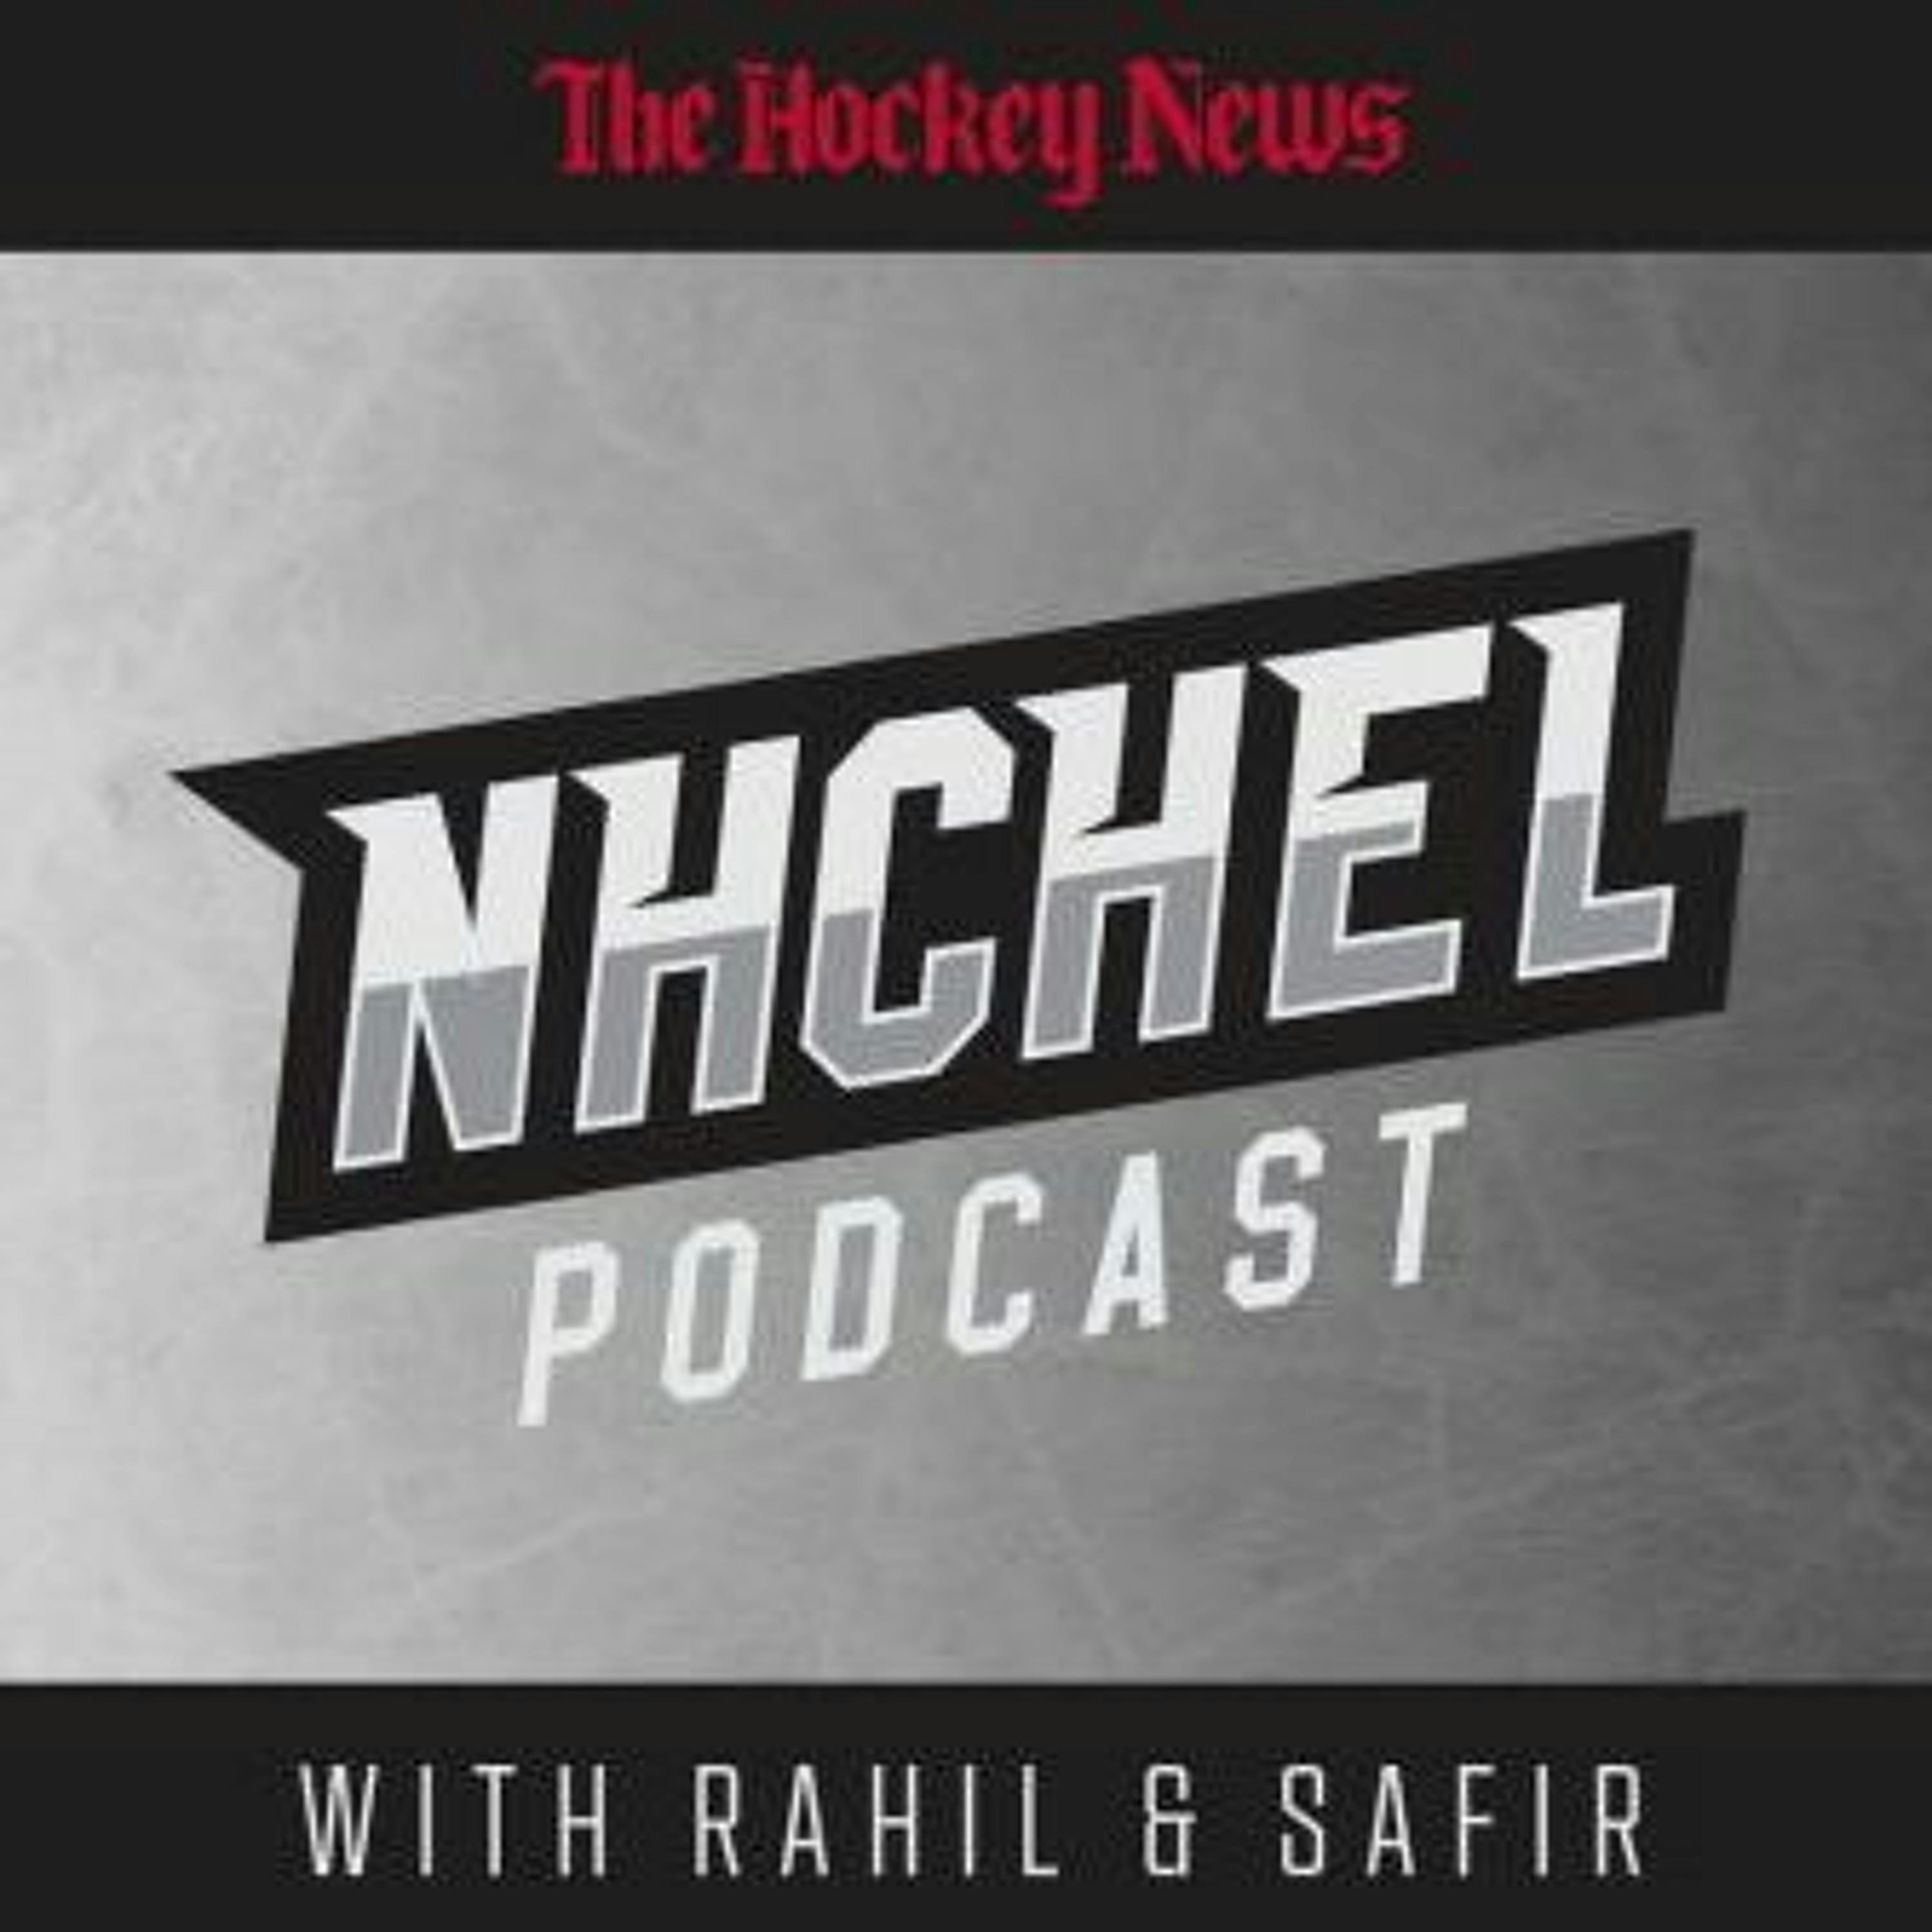 NHChel Podcast: Episode 10 - Islanders Esports Night